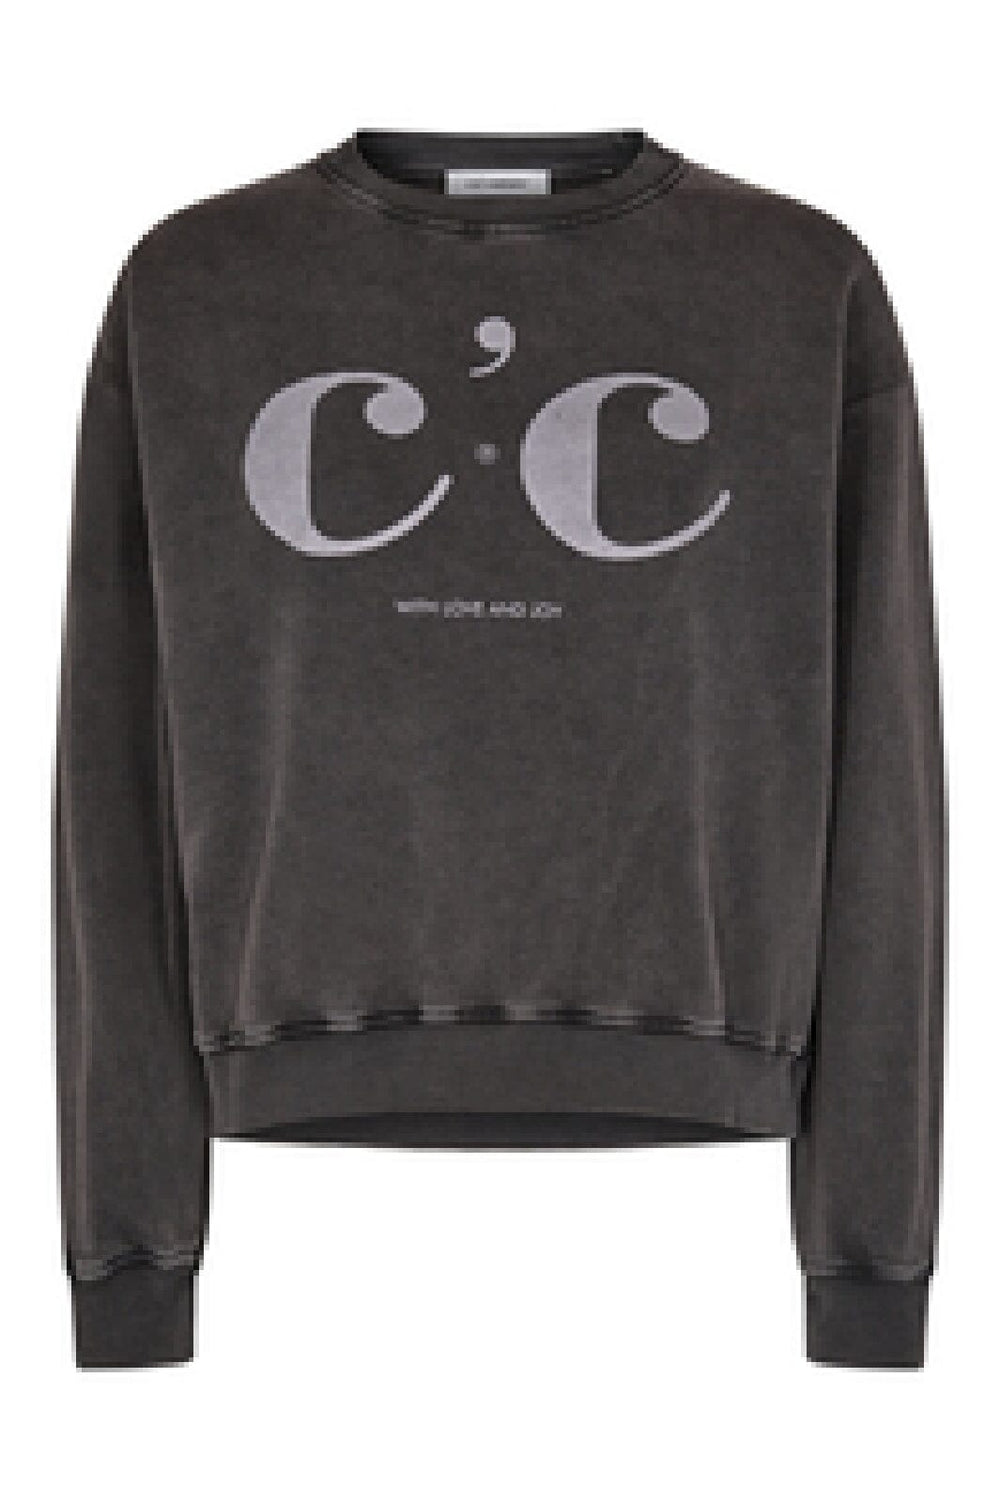 Co´couture - Cc Cleancc Sweat - 96 Black Sweatshirt 